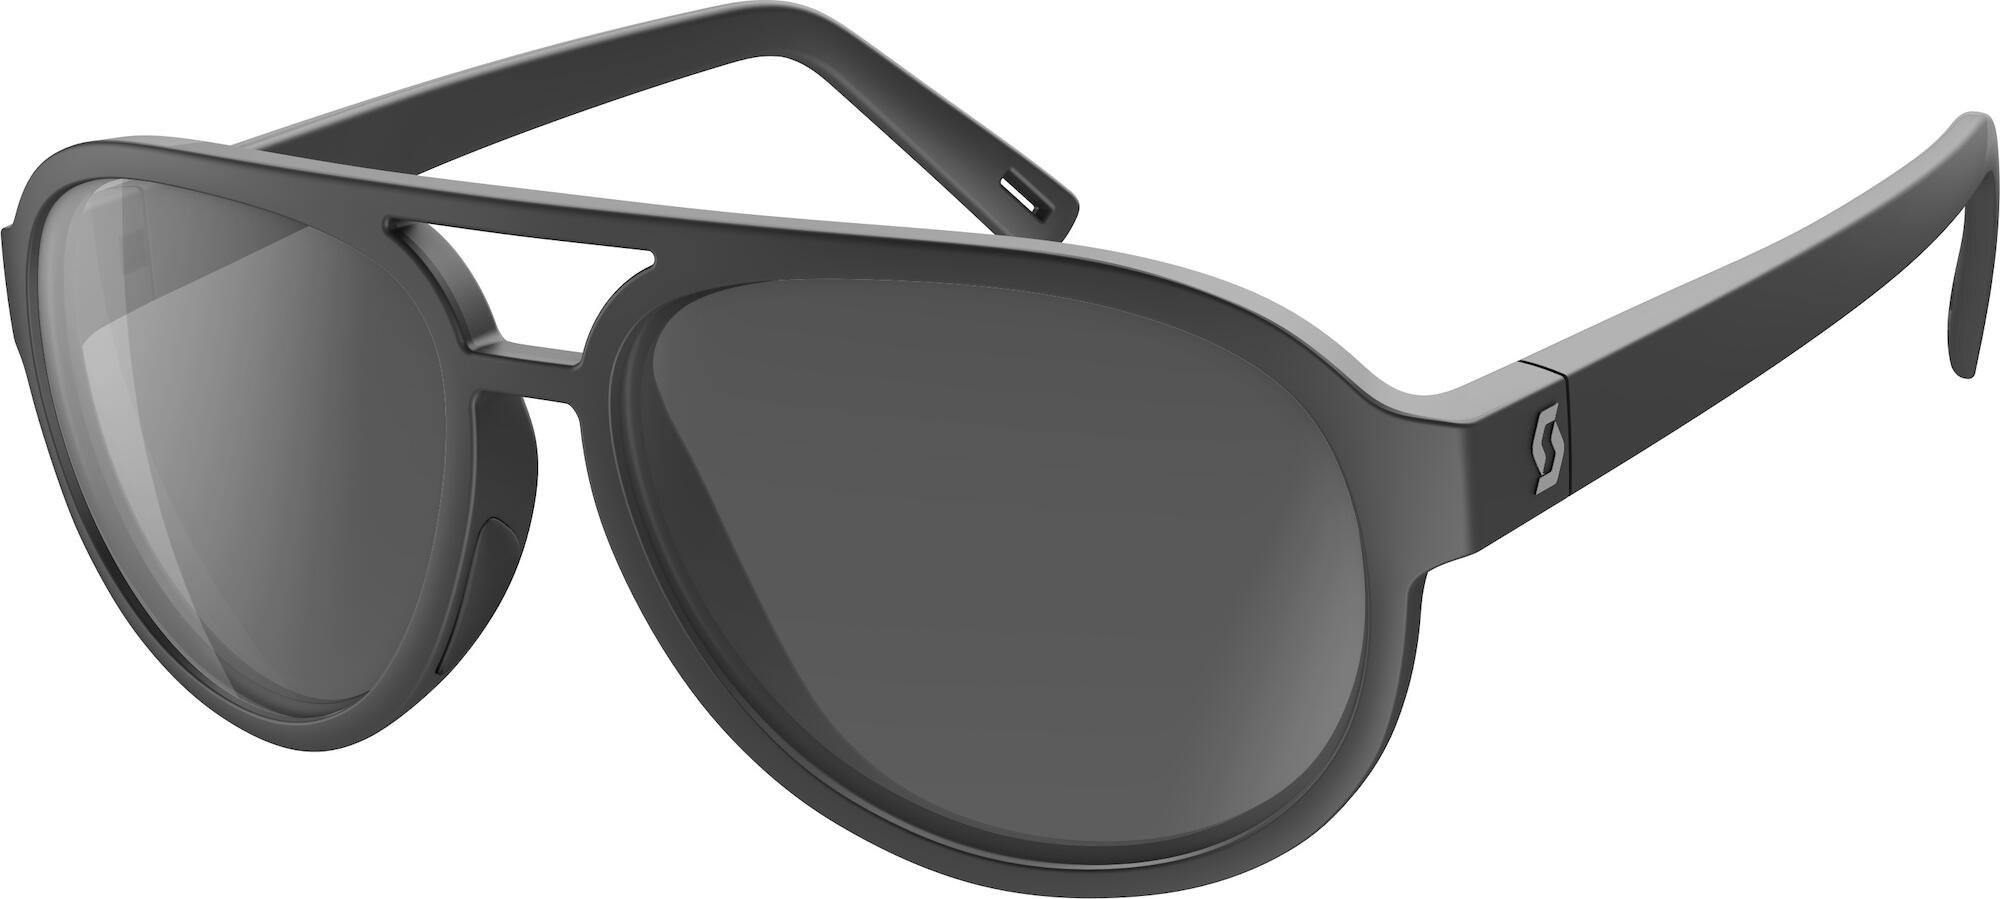 Scott Sunglasses Bass black/grey (0001)